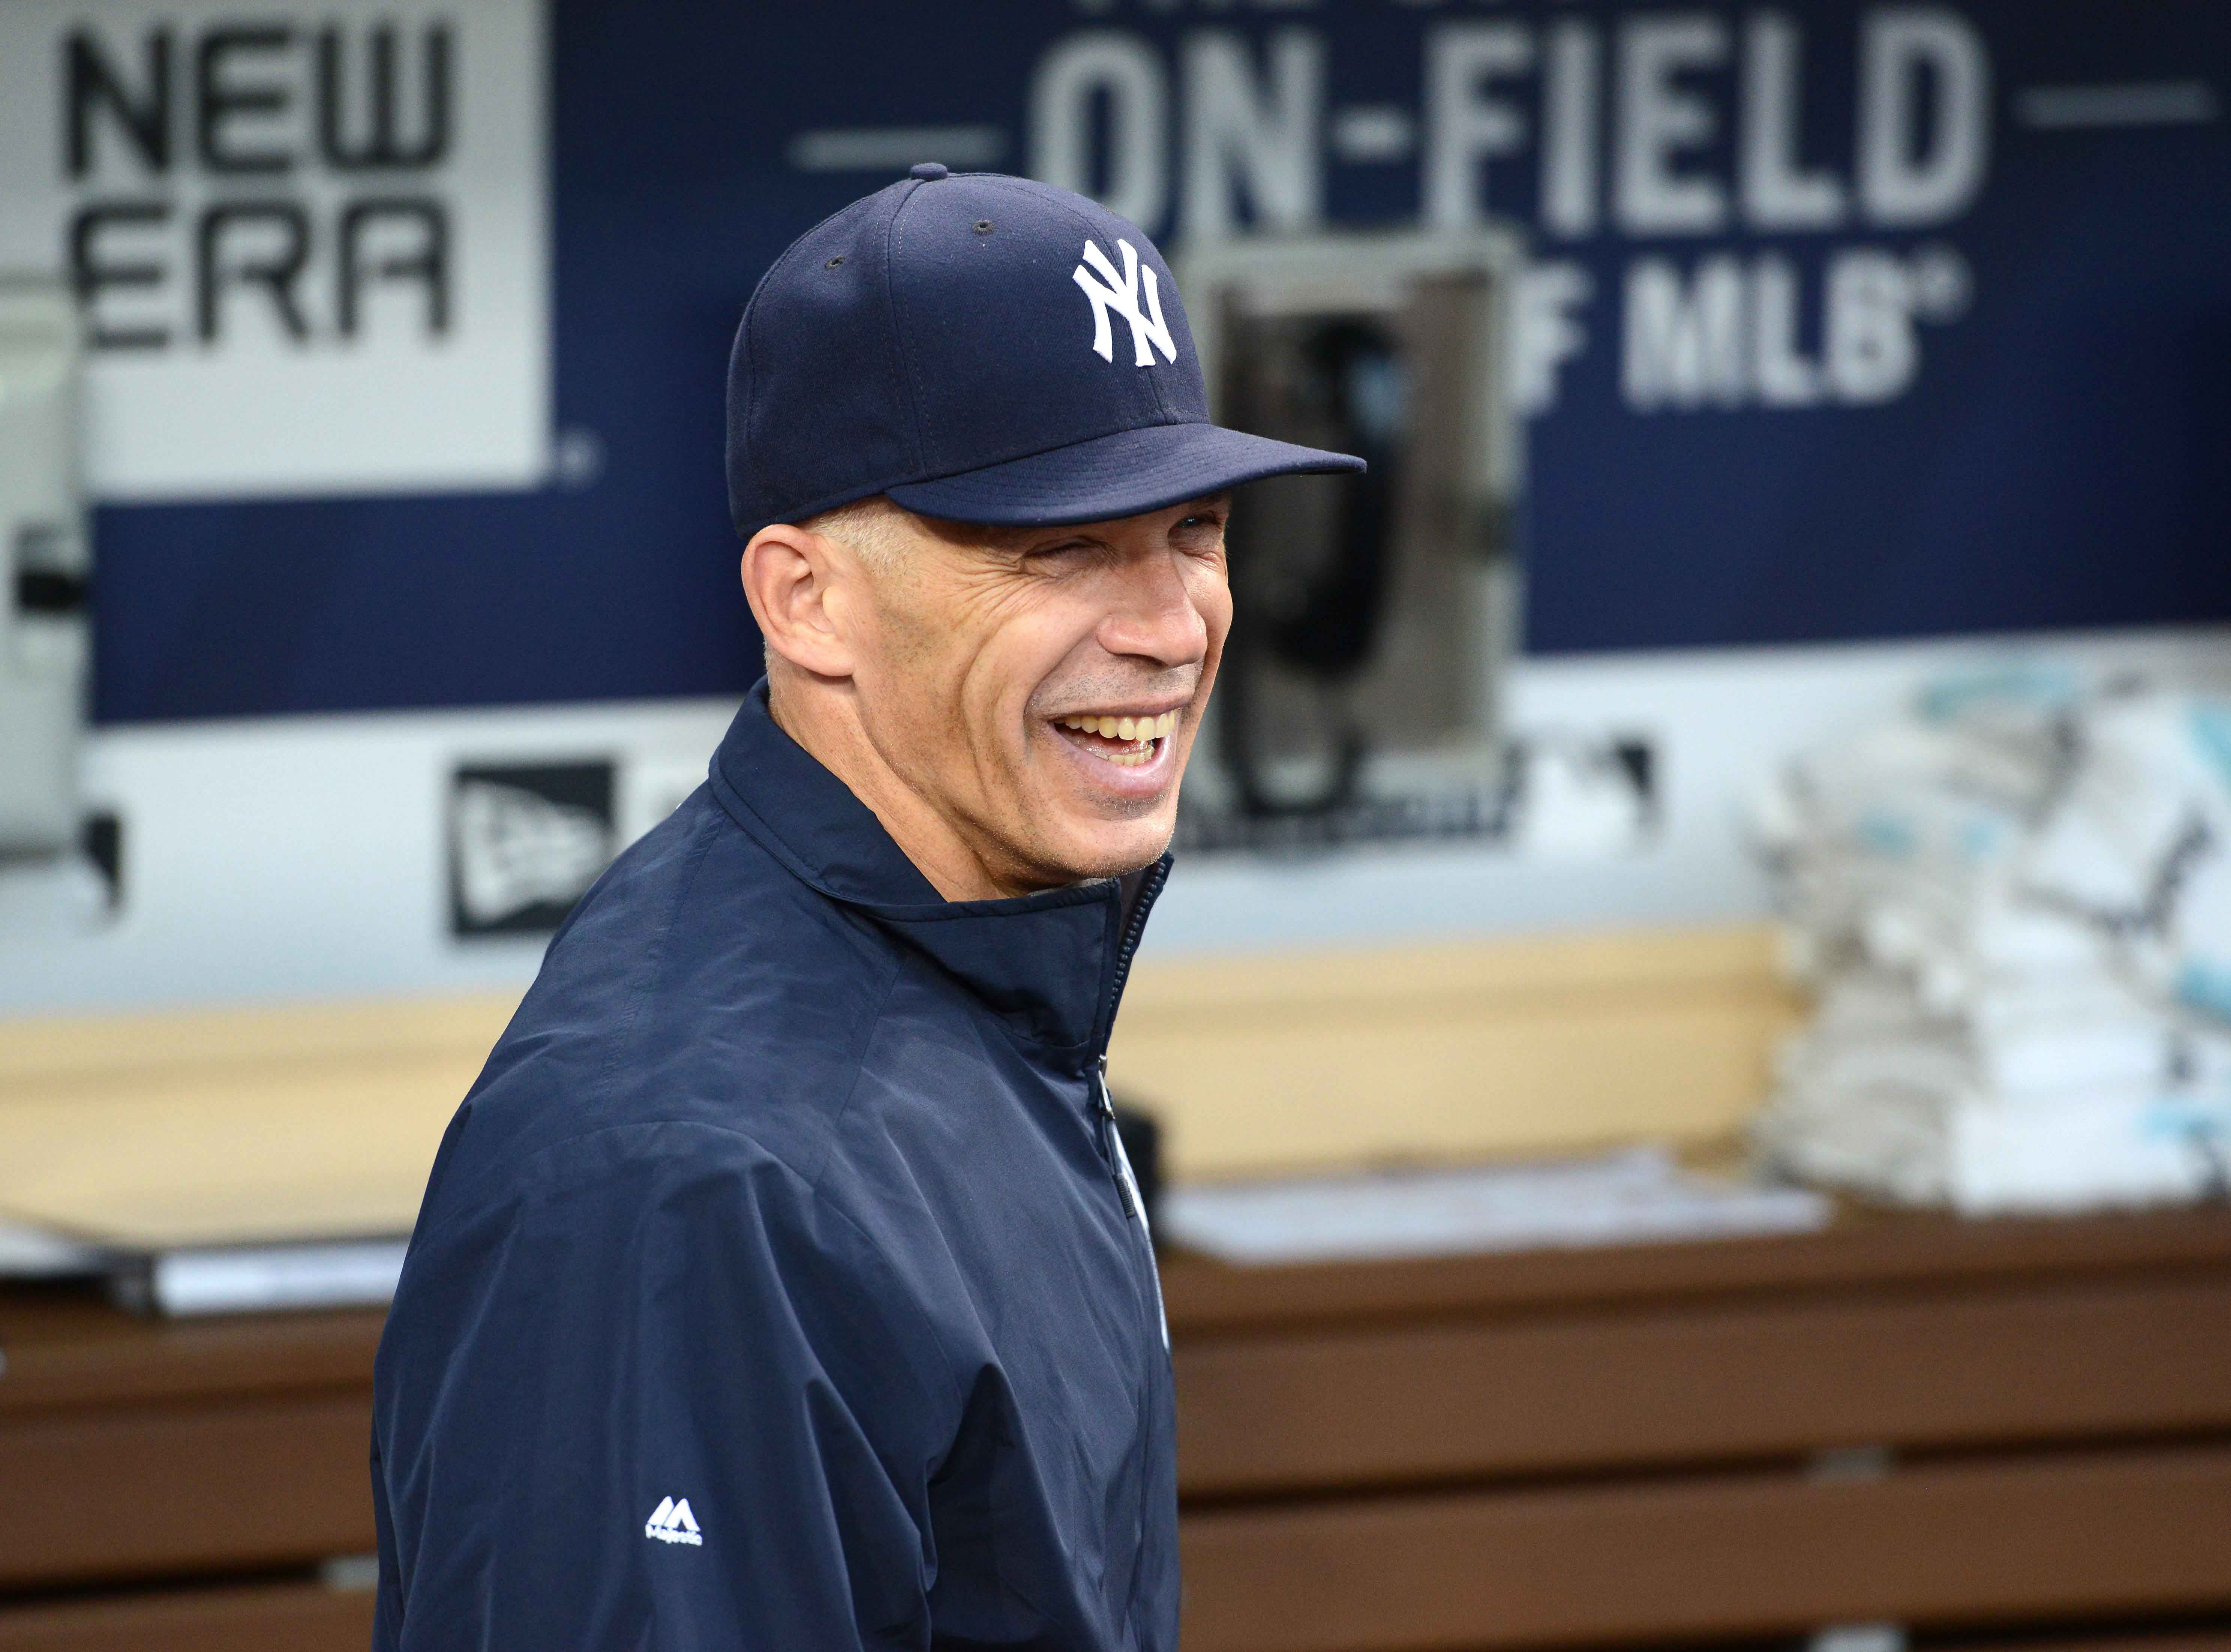 Joe Girardi Earns Win No. 800 As New York Yankees' Manager 